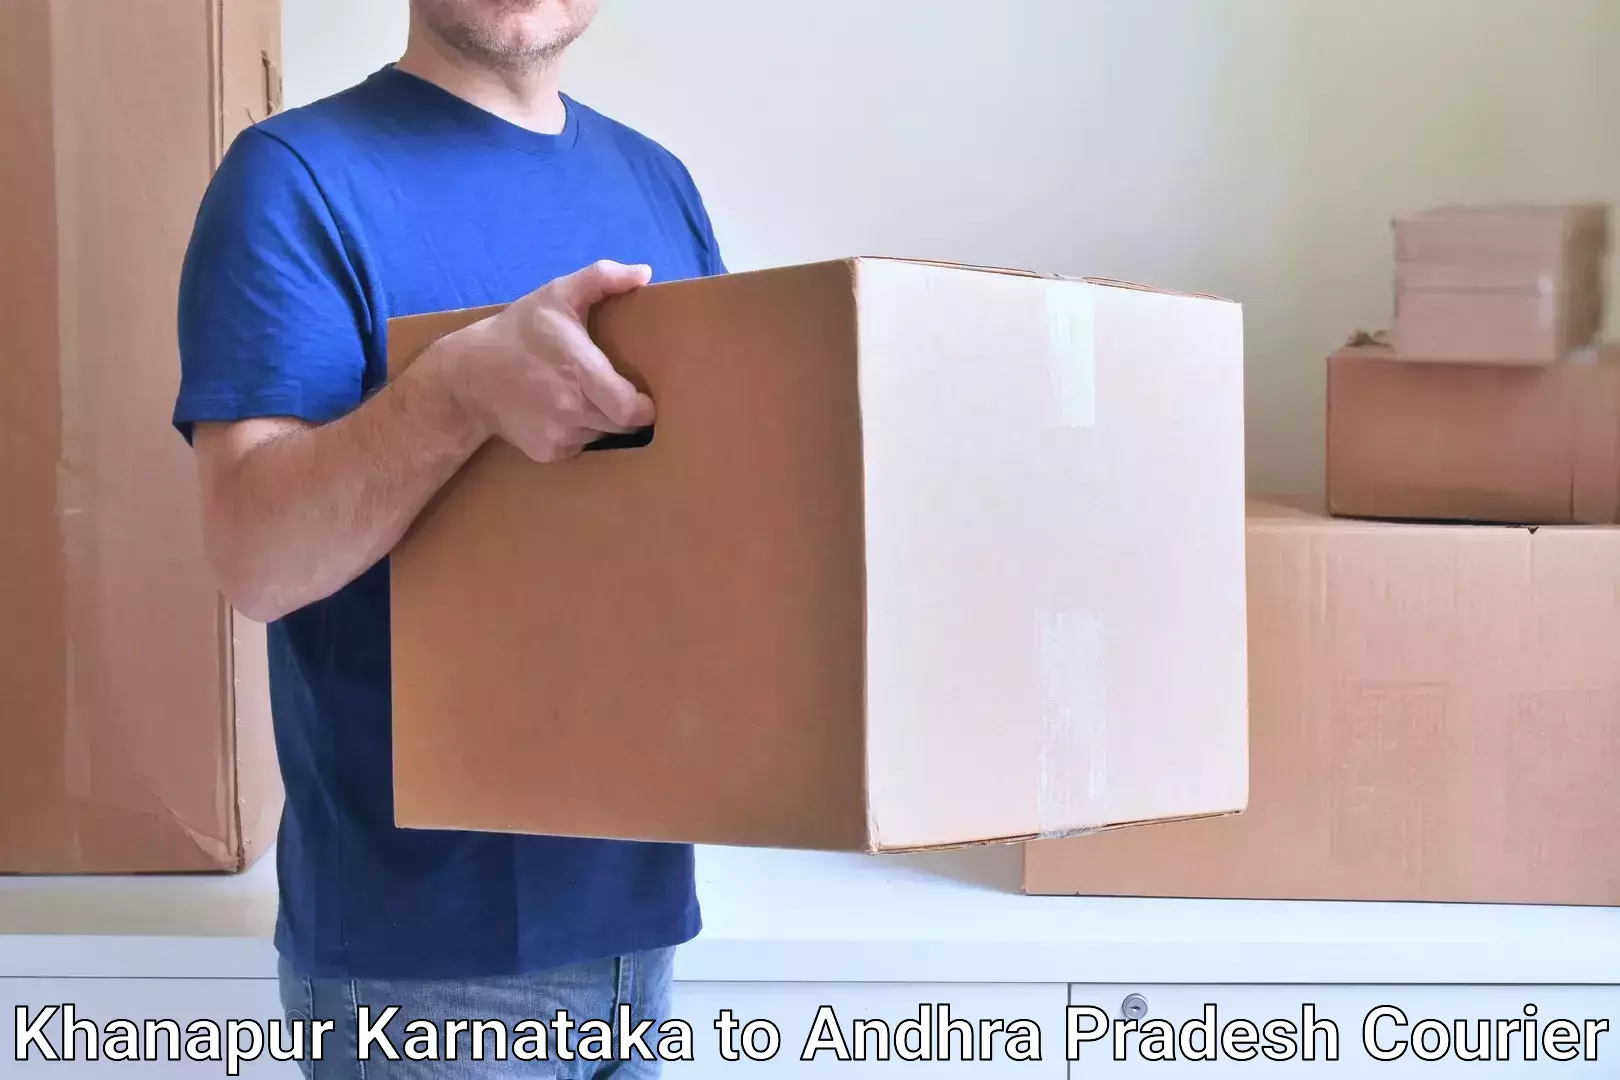 Affordable parcel service Khanapur Karnataka to Gorantla